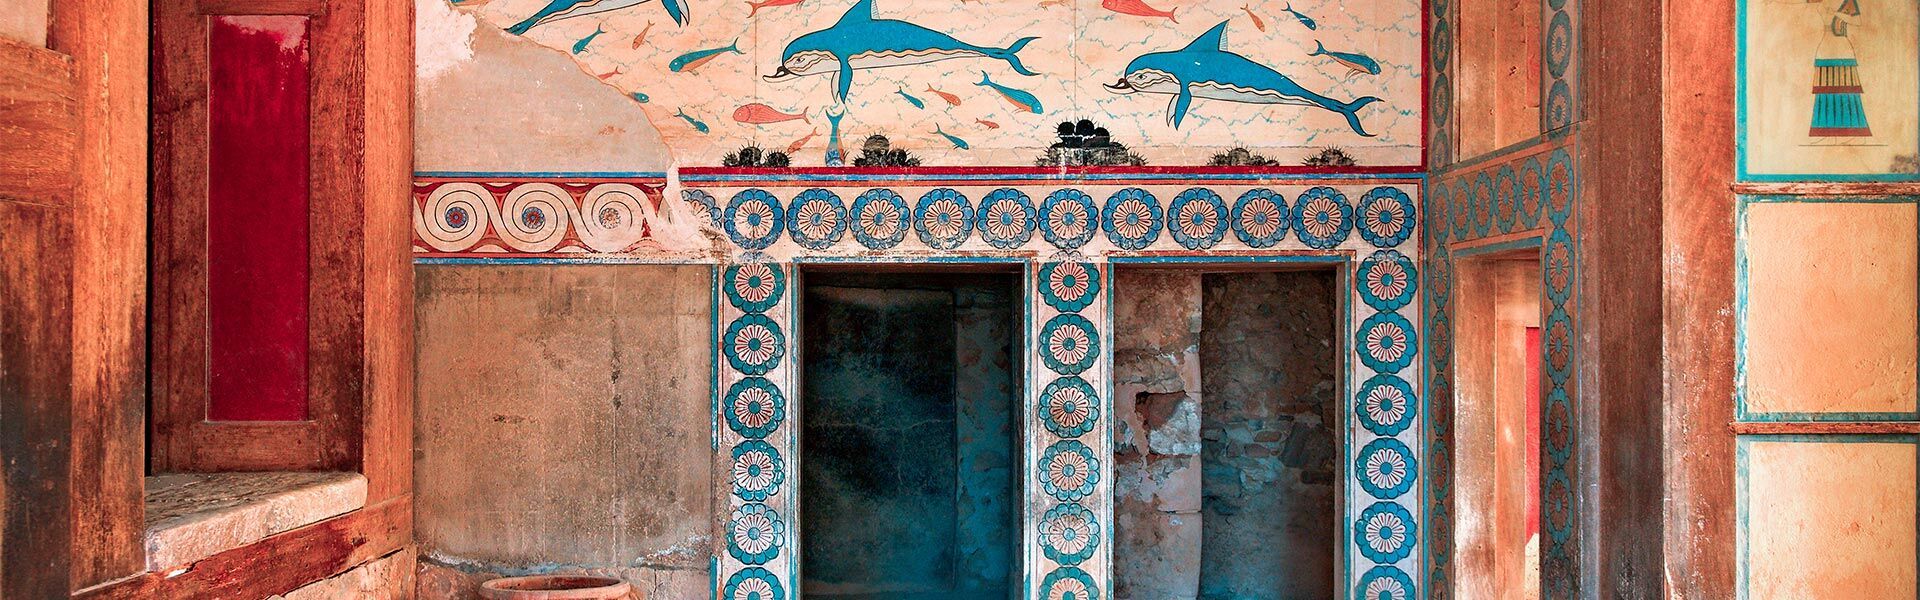 A room at Knossos palace